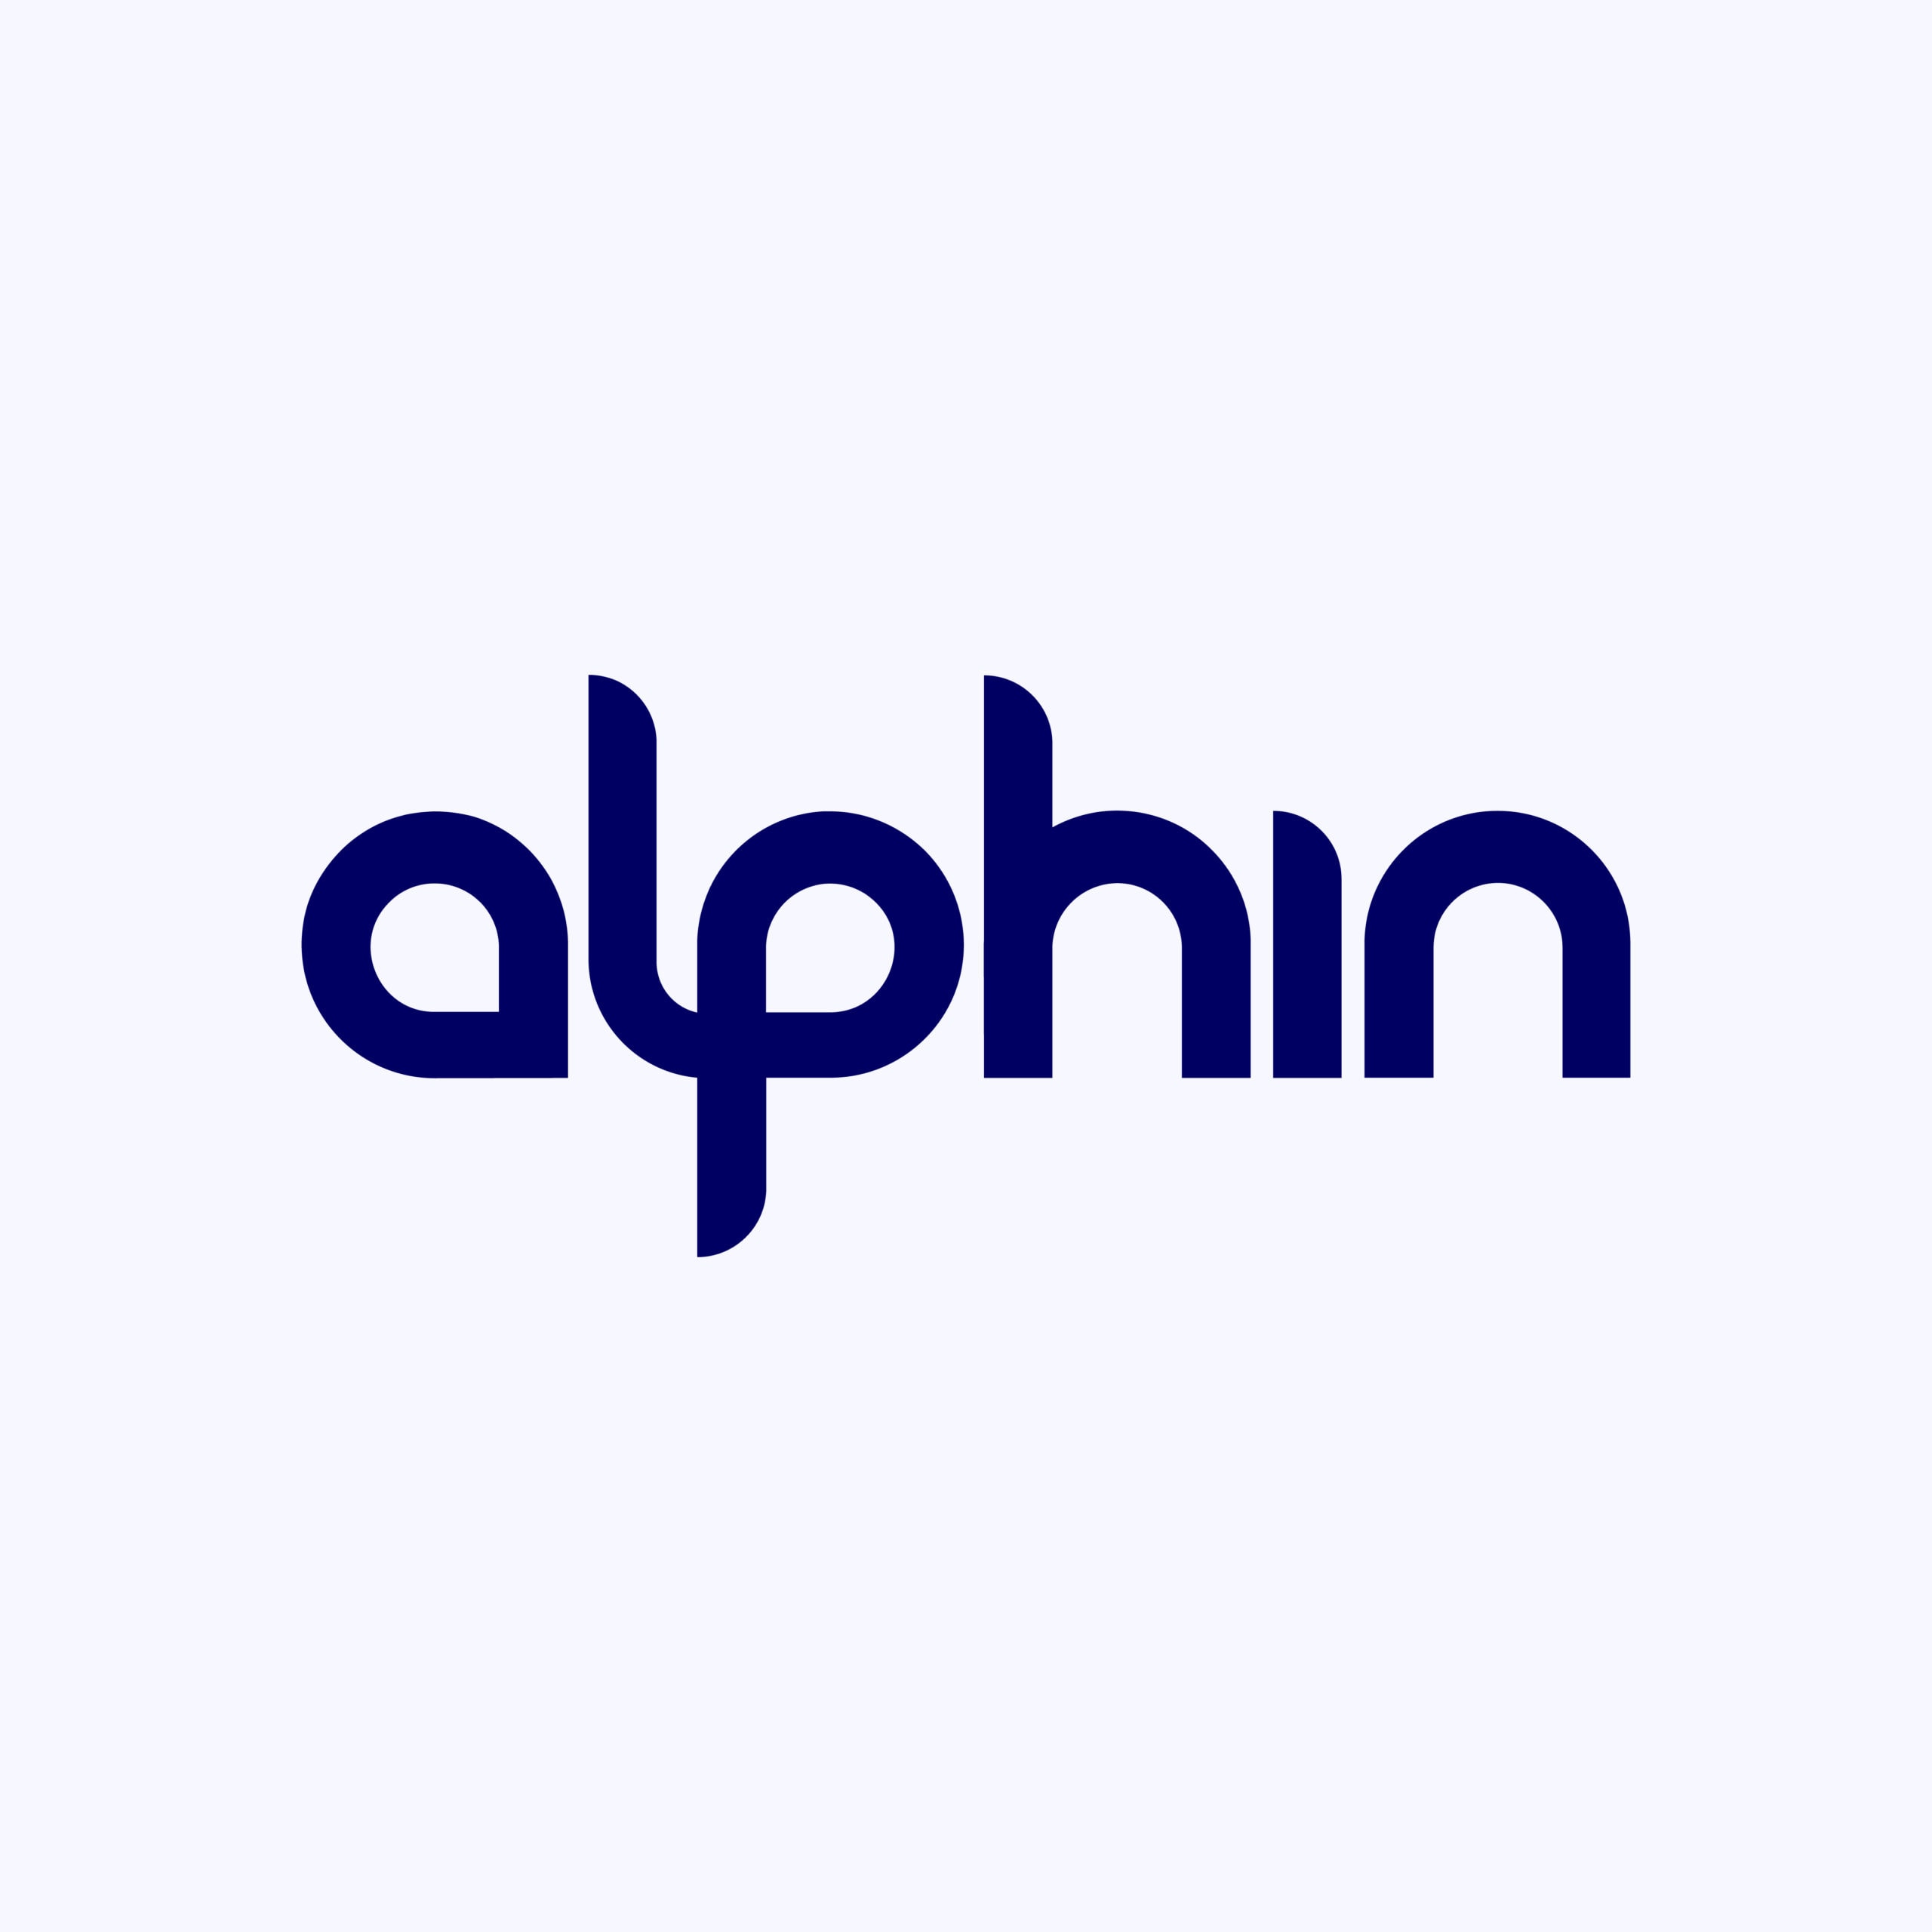 Alphin Logo BlueWhite BG a4914324d4adc3532801c49d88b8c0f3